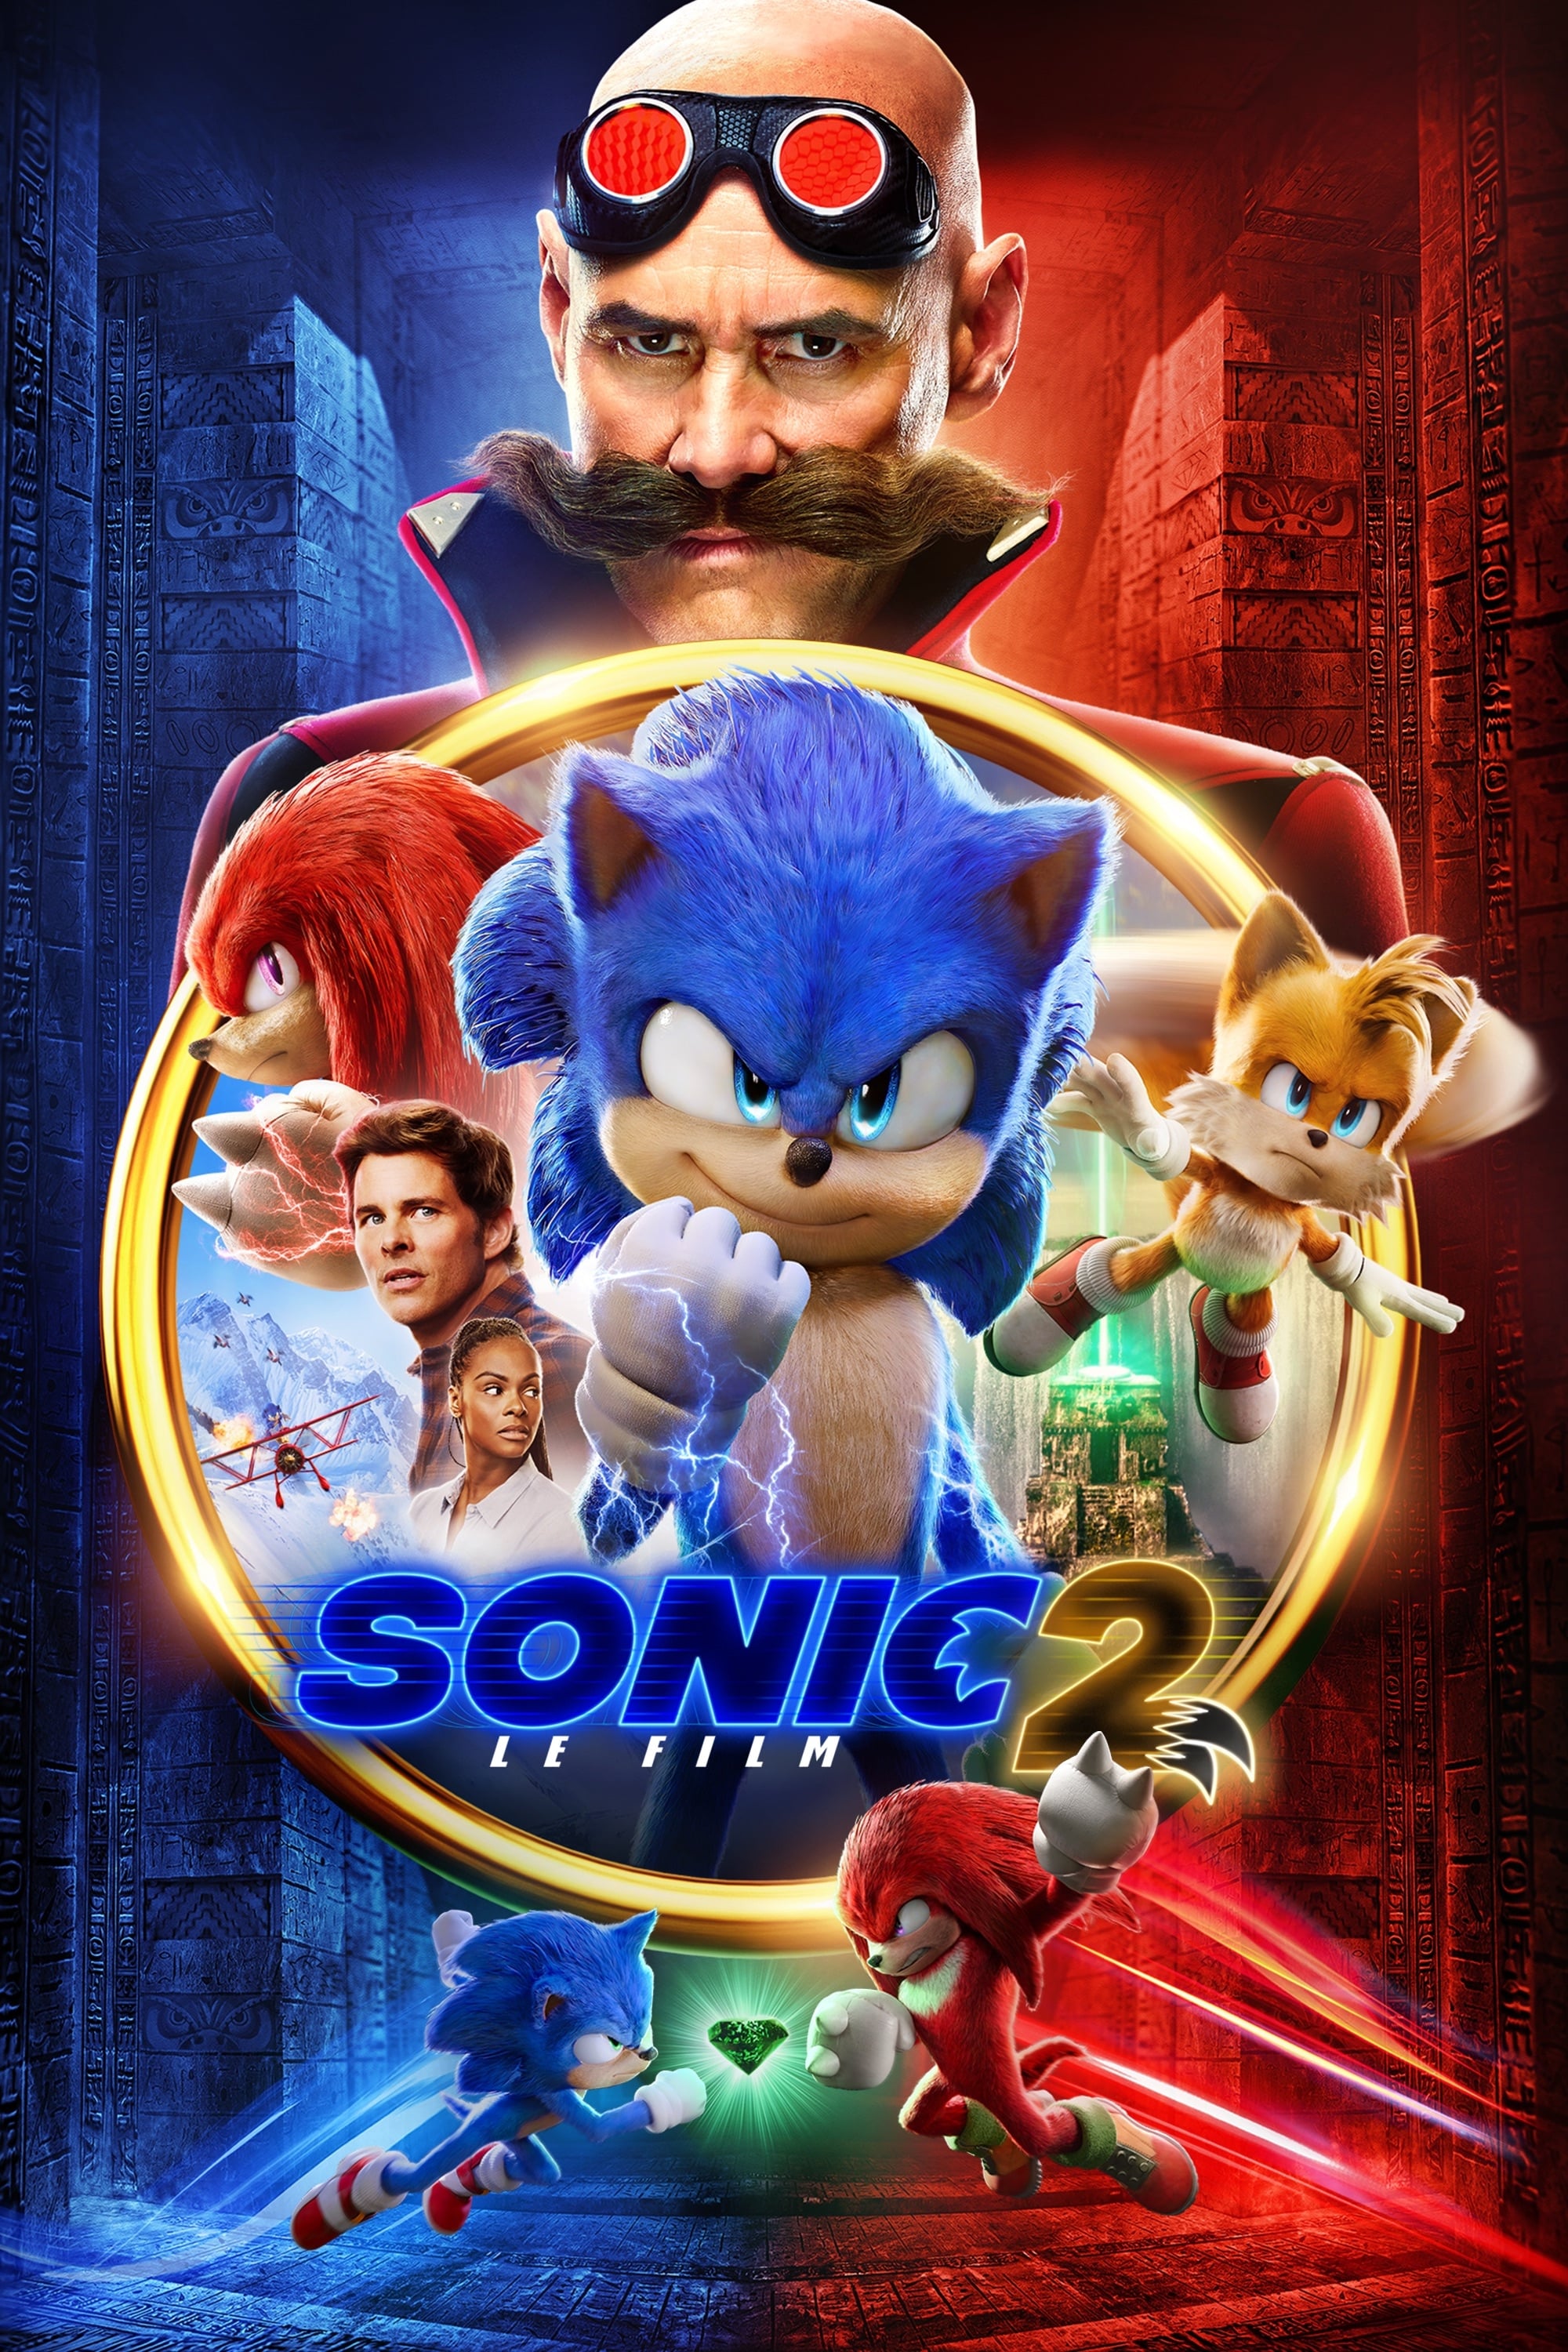 Affiche du film "Sonic 2"